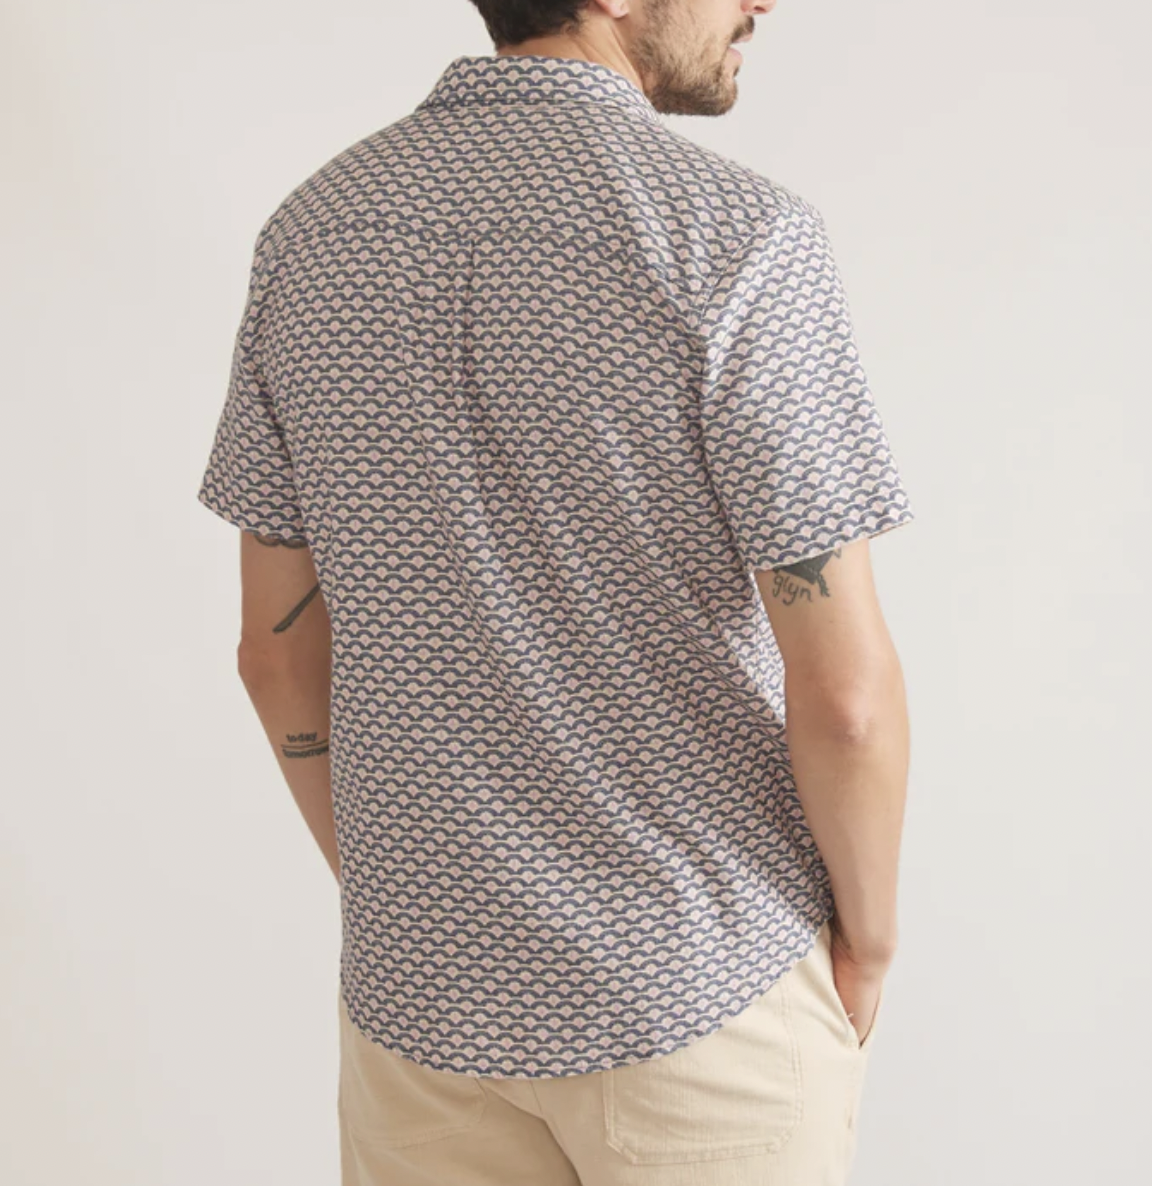 Stretch Selvage Short Sleeve Shirt - Japanese Wave Print